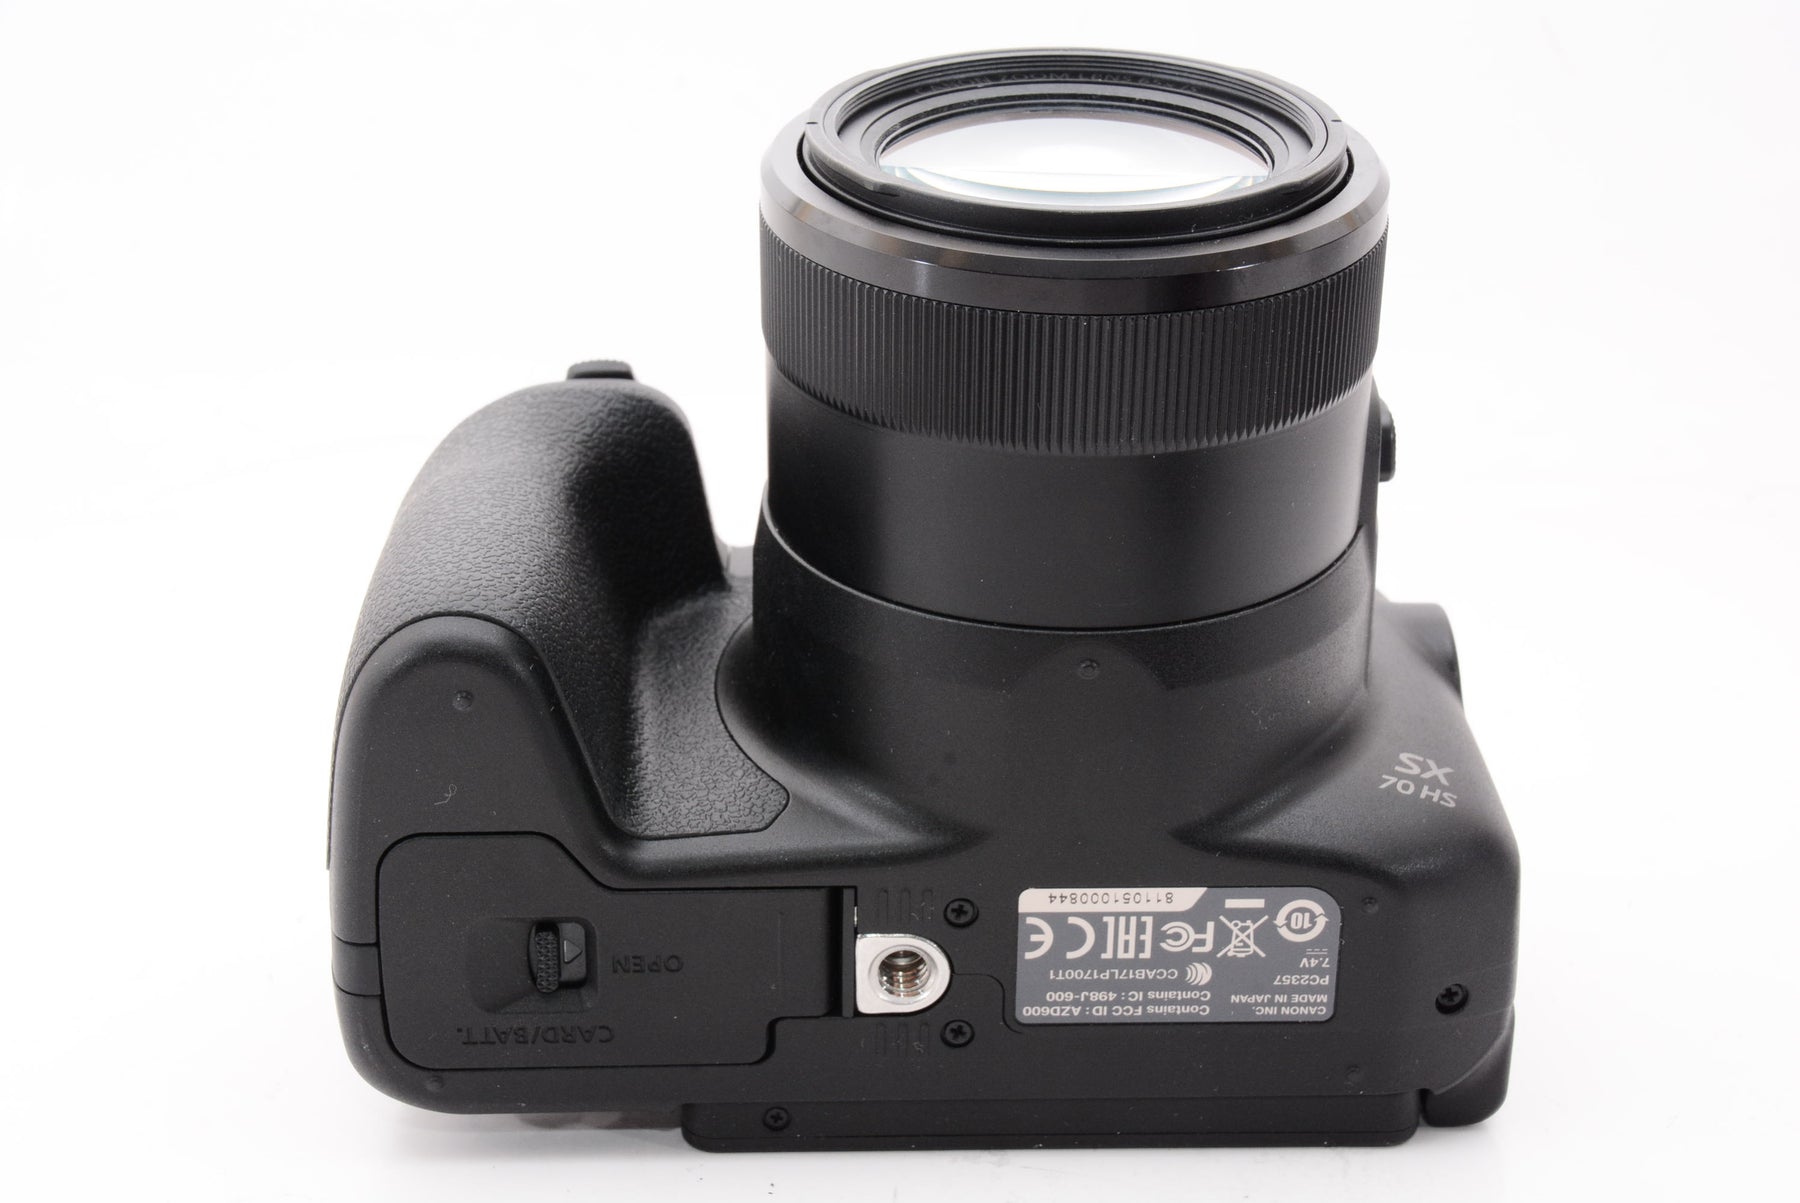 Canon デジタルカメラ PowerShot SX500IS 約1600万画素 光学30倍ズーム